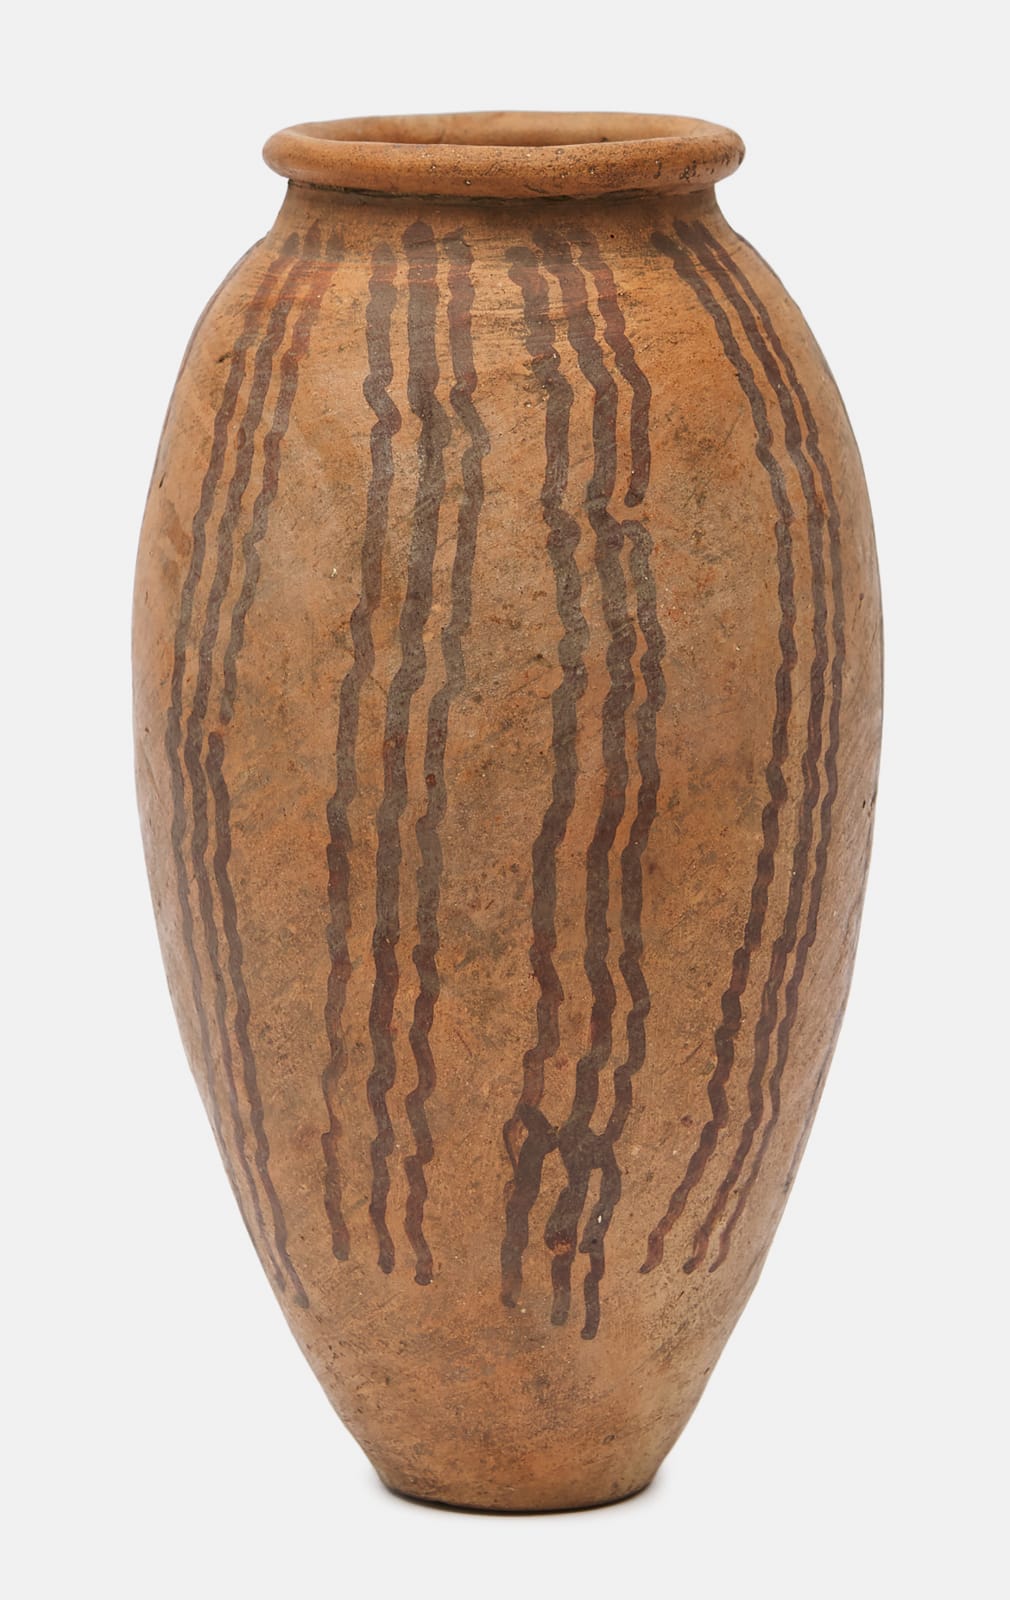 Anon, Egyptian Predynastic Pottery Jar, Naqada II period, c. 3600-3200 BC